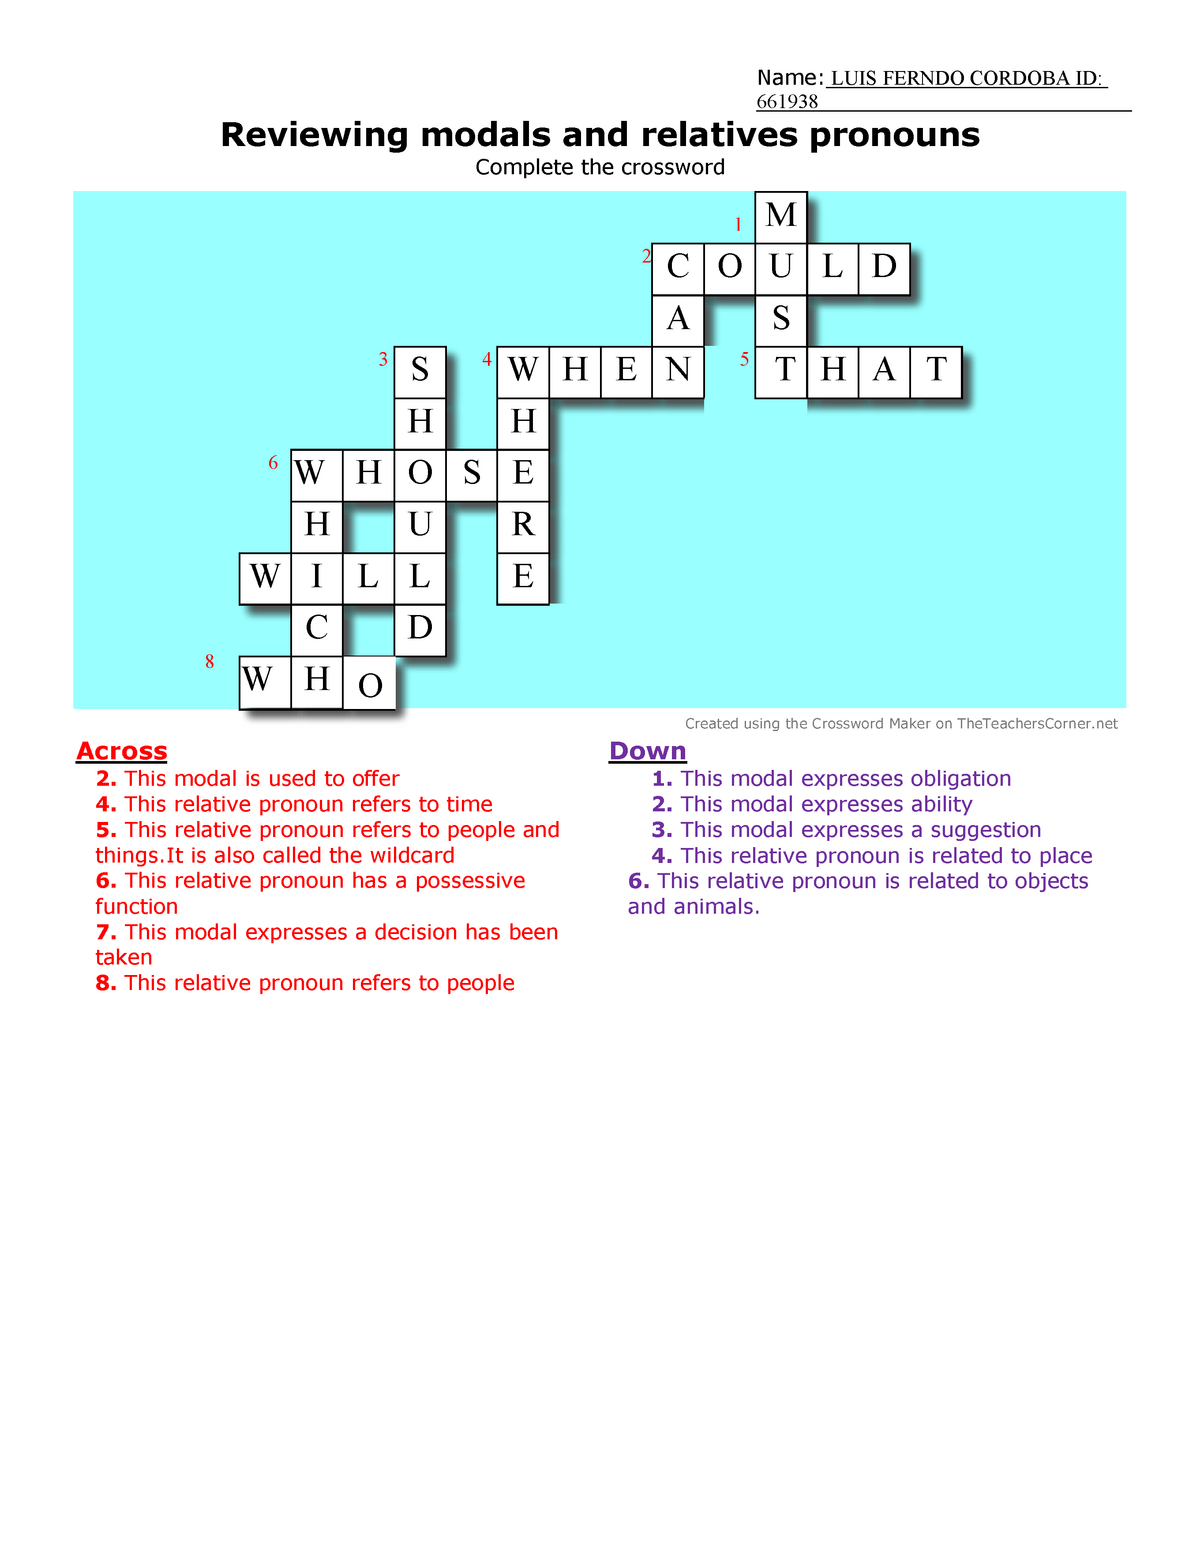 Crossword huguhgh Created using the Crossword Maker on